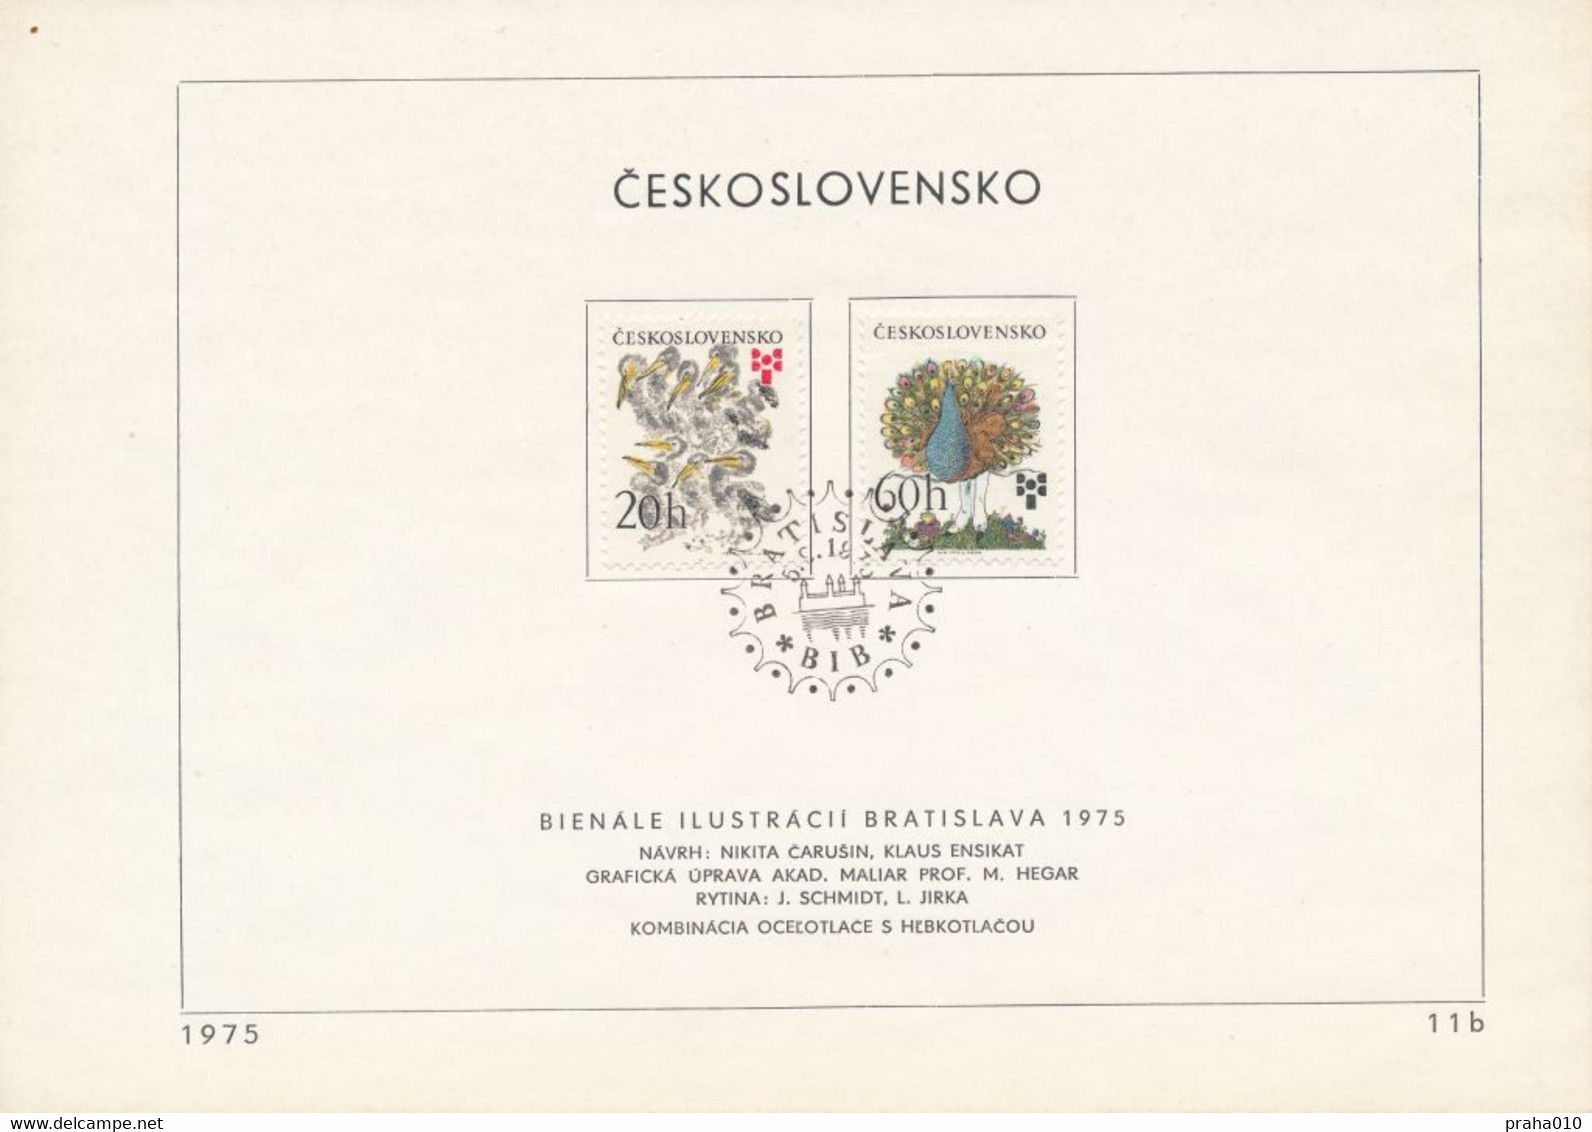 Czechoslovakia / First Day Sheet (1975/11 B) Bratislava: Biennale Of Illustrations (N. Casusin, K. Ensikat) - Peacocks